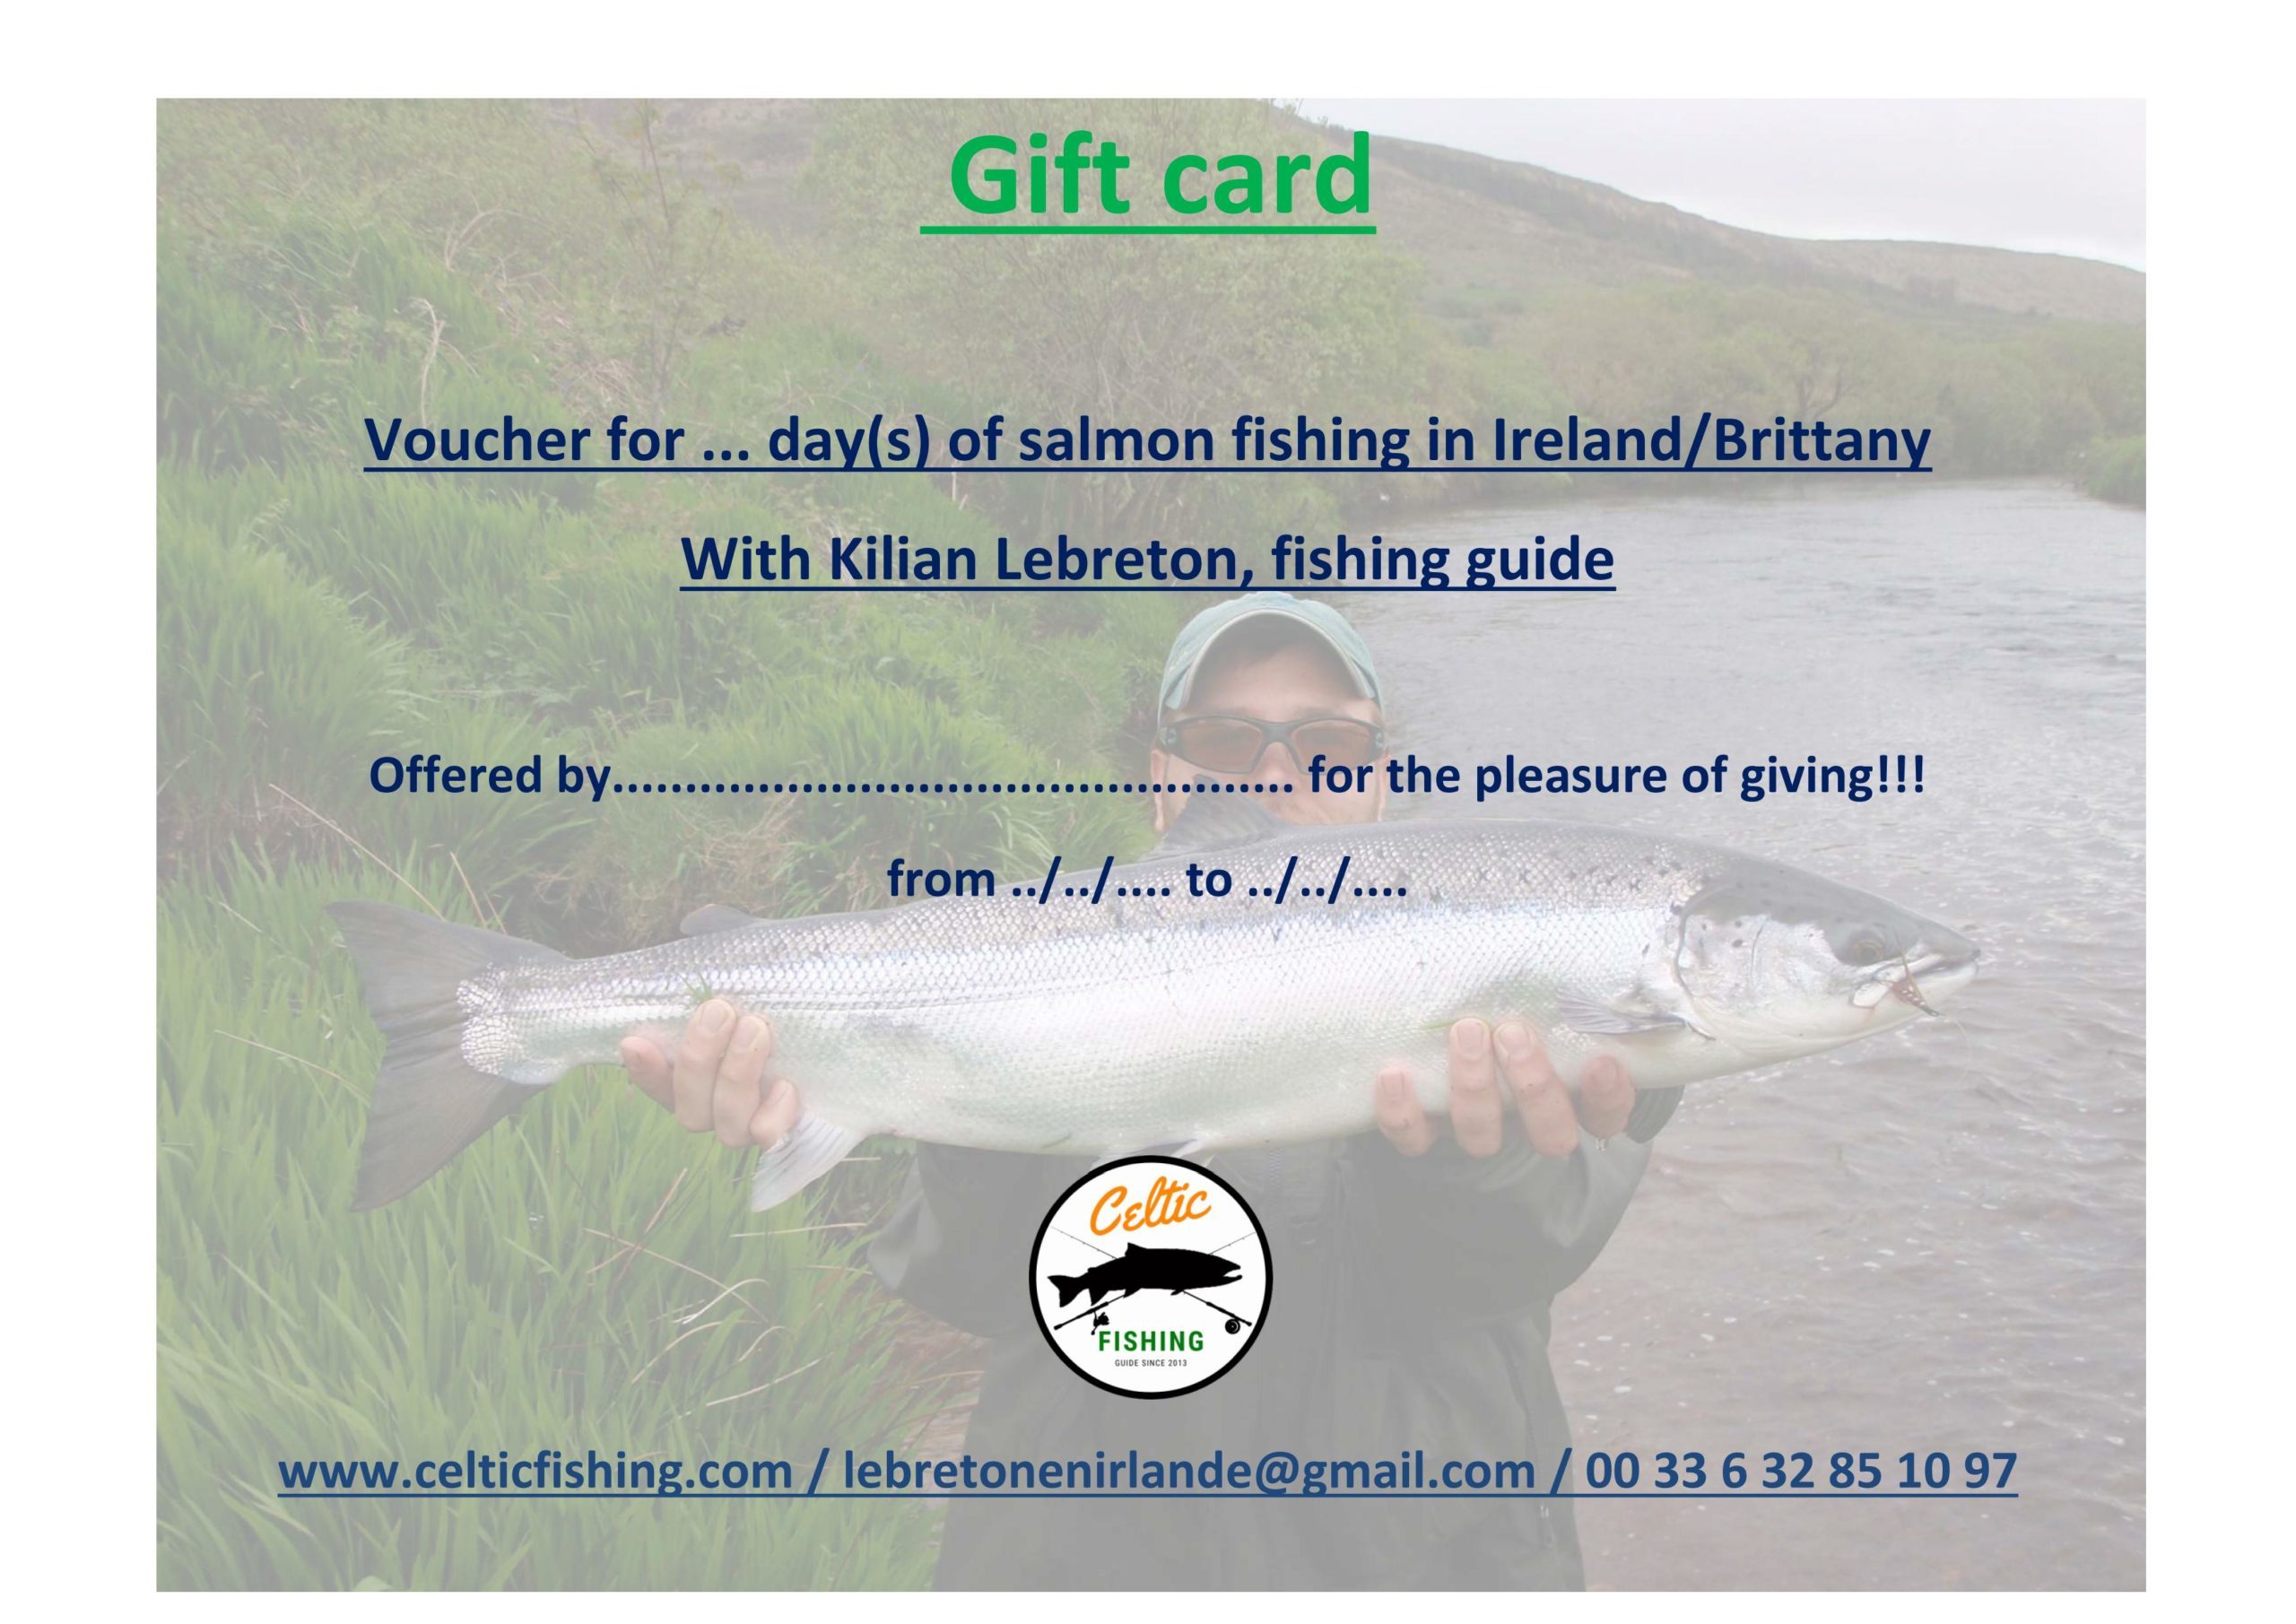 Motion Fishing Company Gift Card